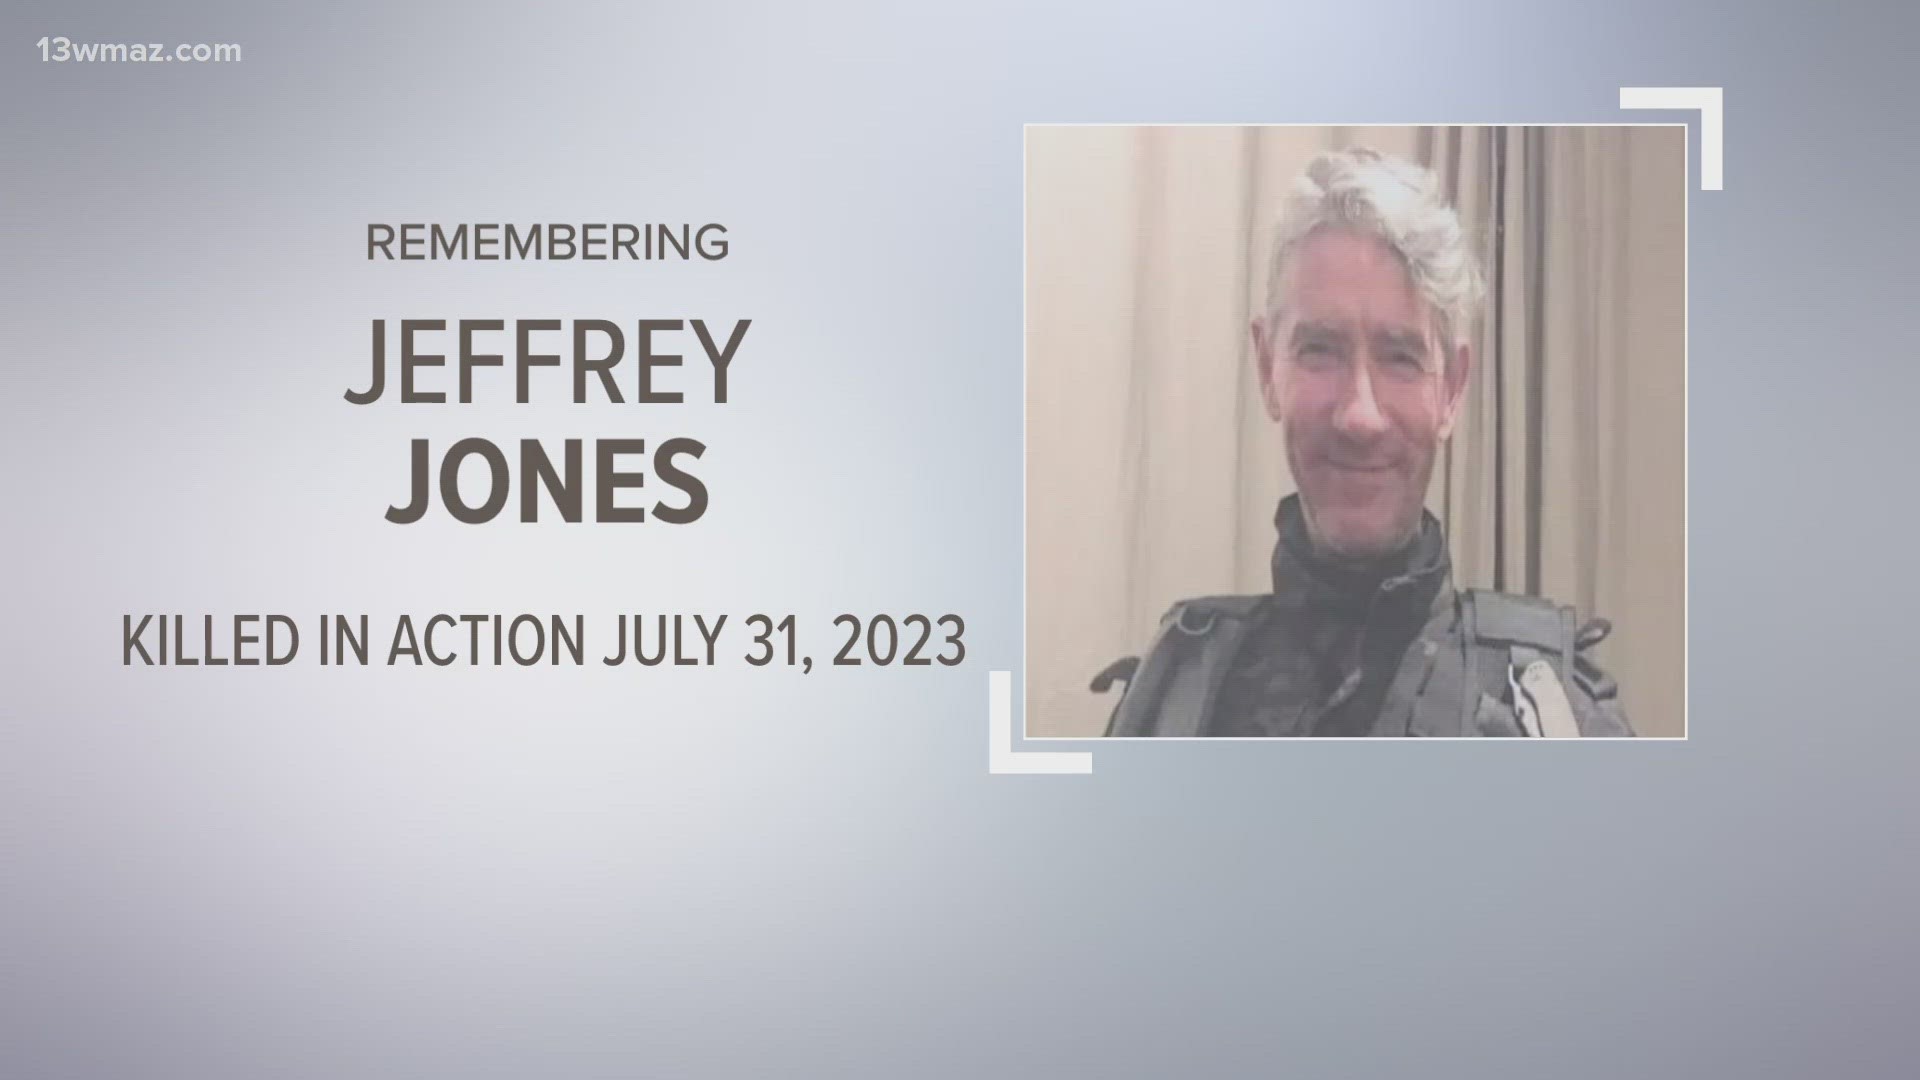 Jeffrey Jones was in Ukraine fighting against the Russian invasion when he was killed.